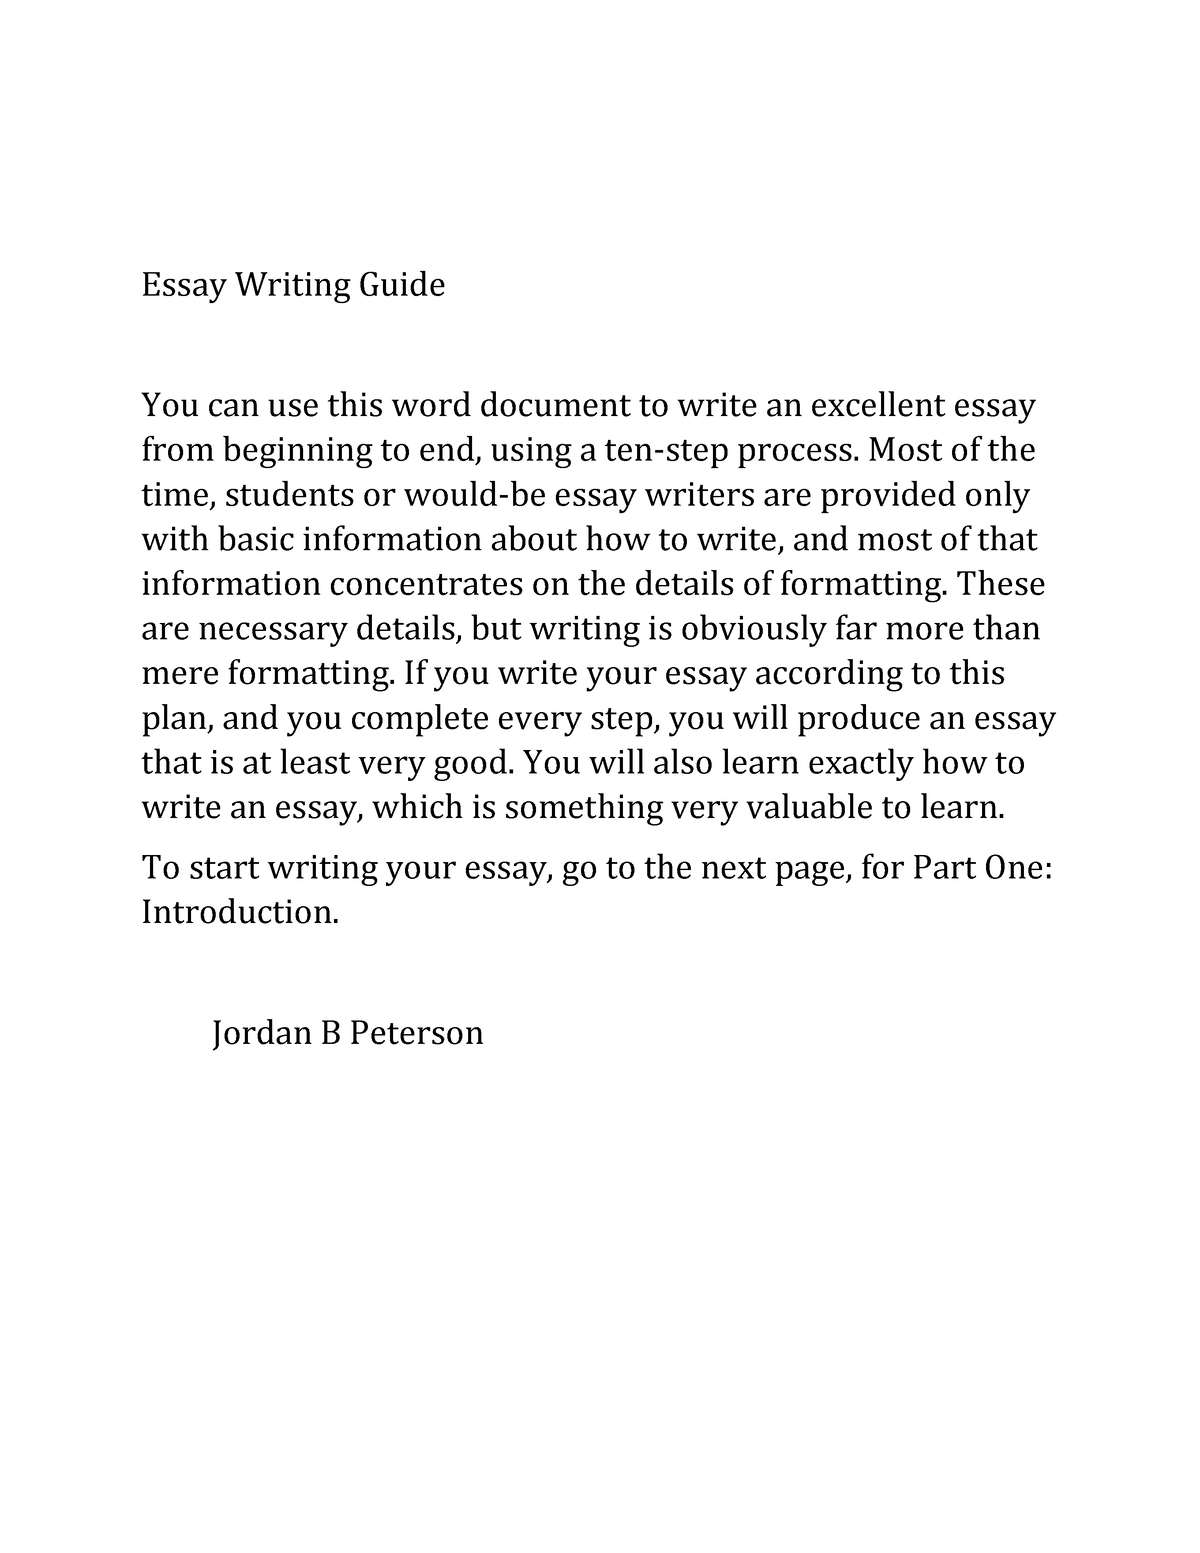 jordan peterson essay document